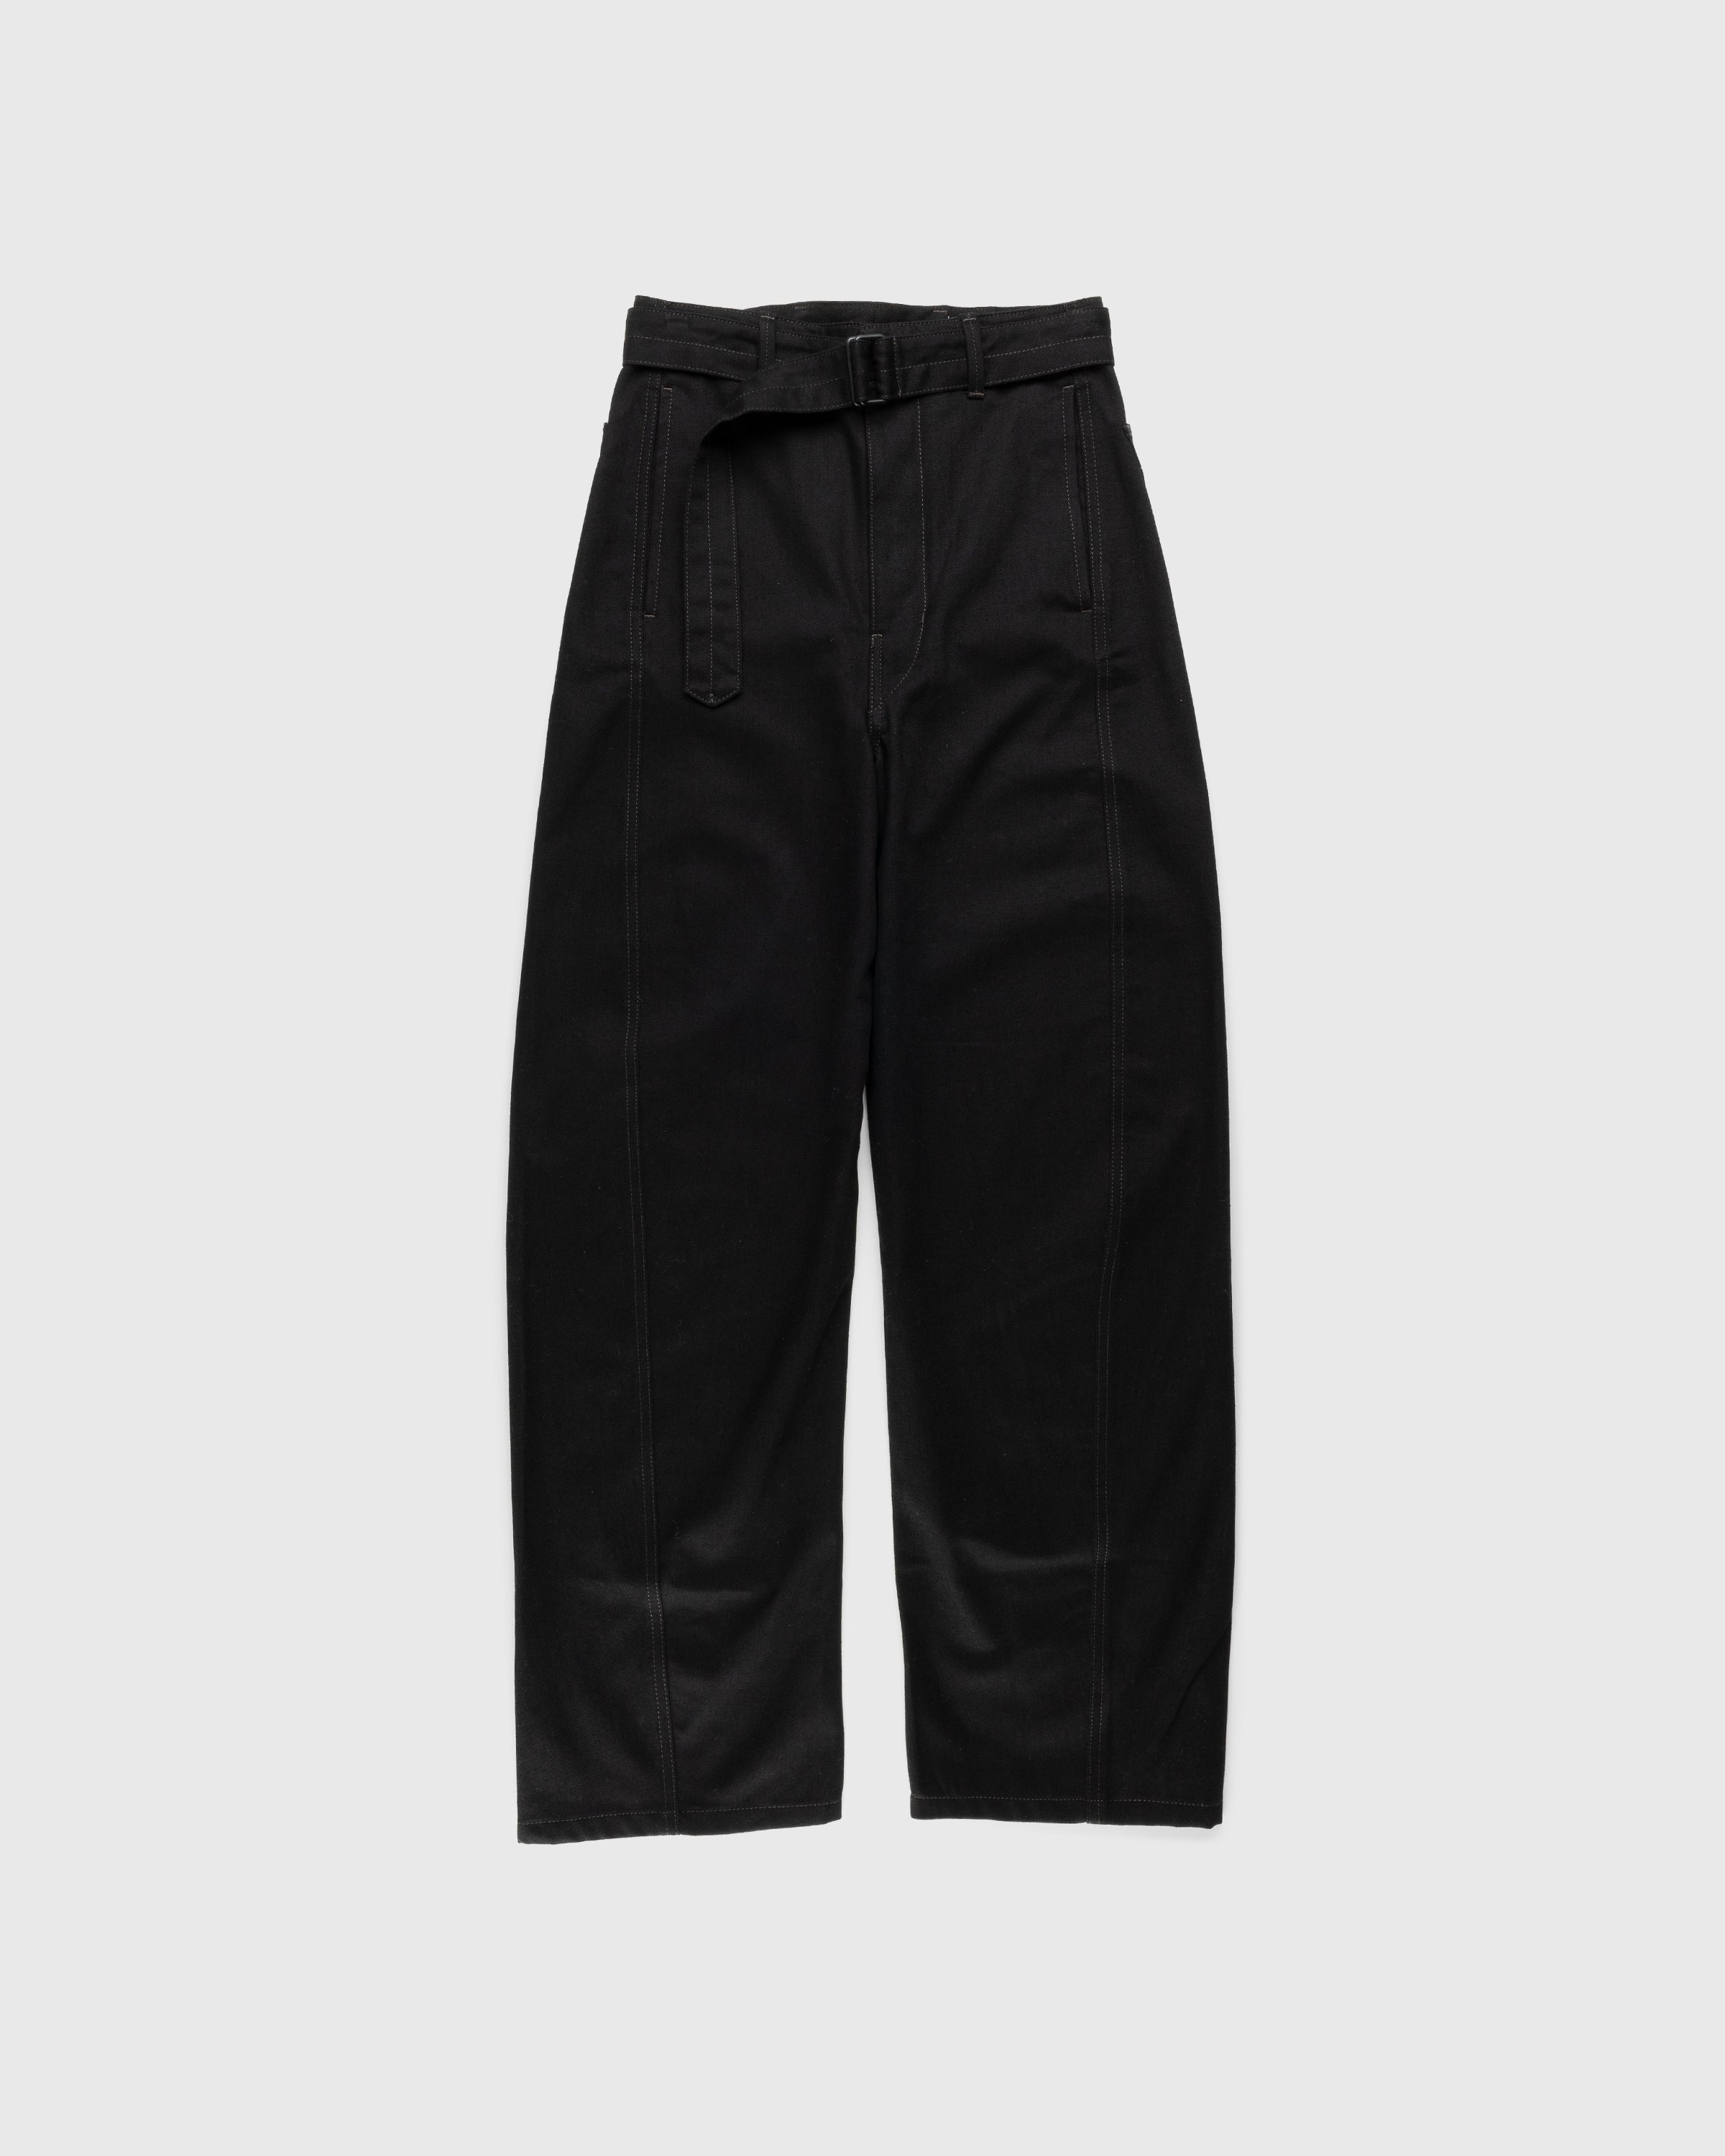 Lemaire - Twisted Belted Pants Black - Clothing - Black - Image 1